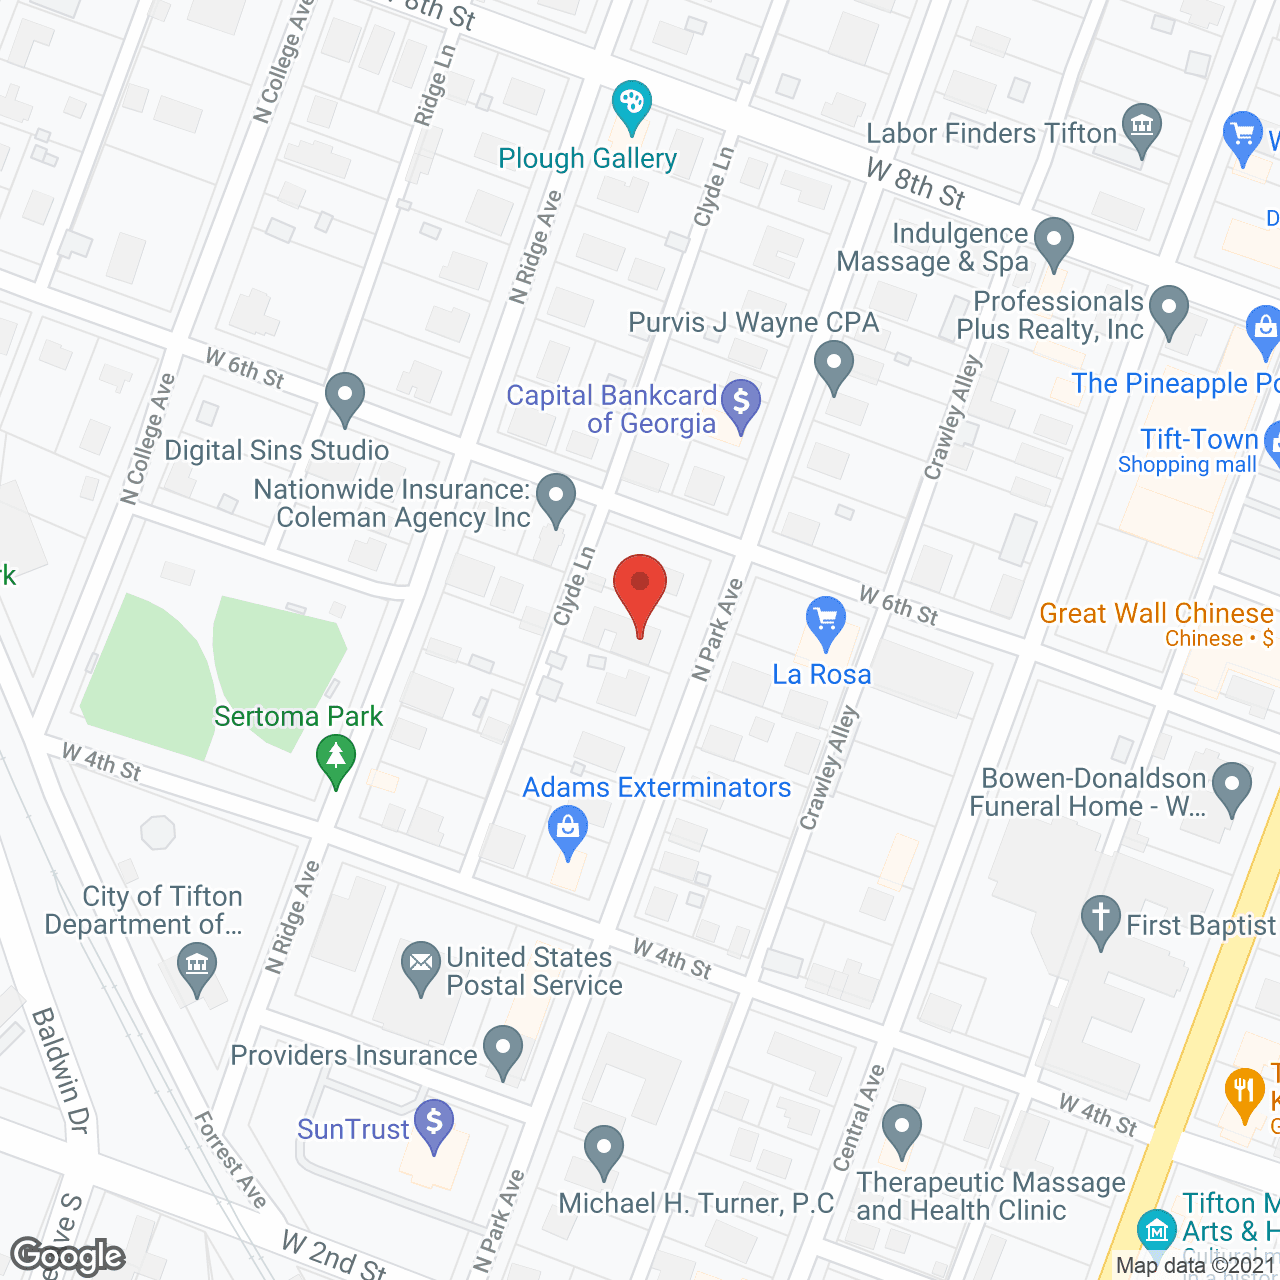 Bradley Place in google map